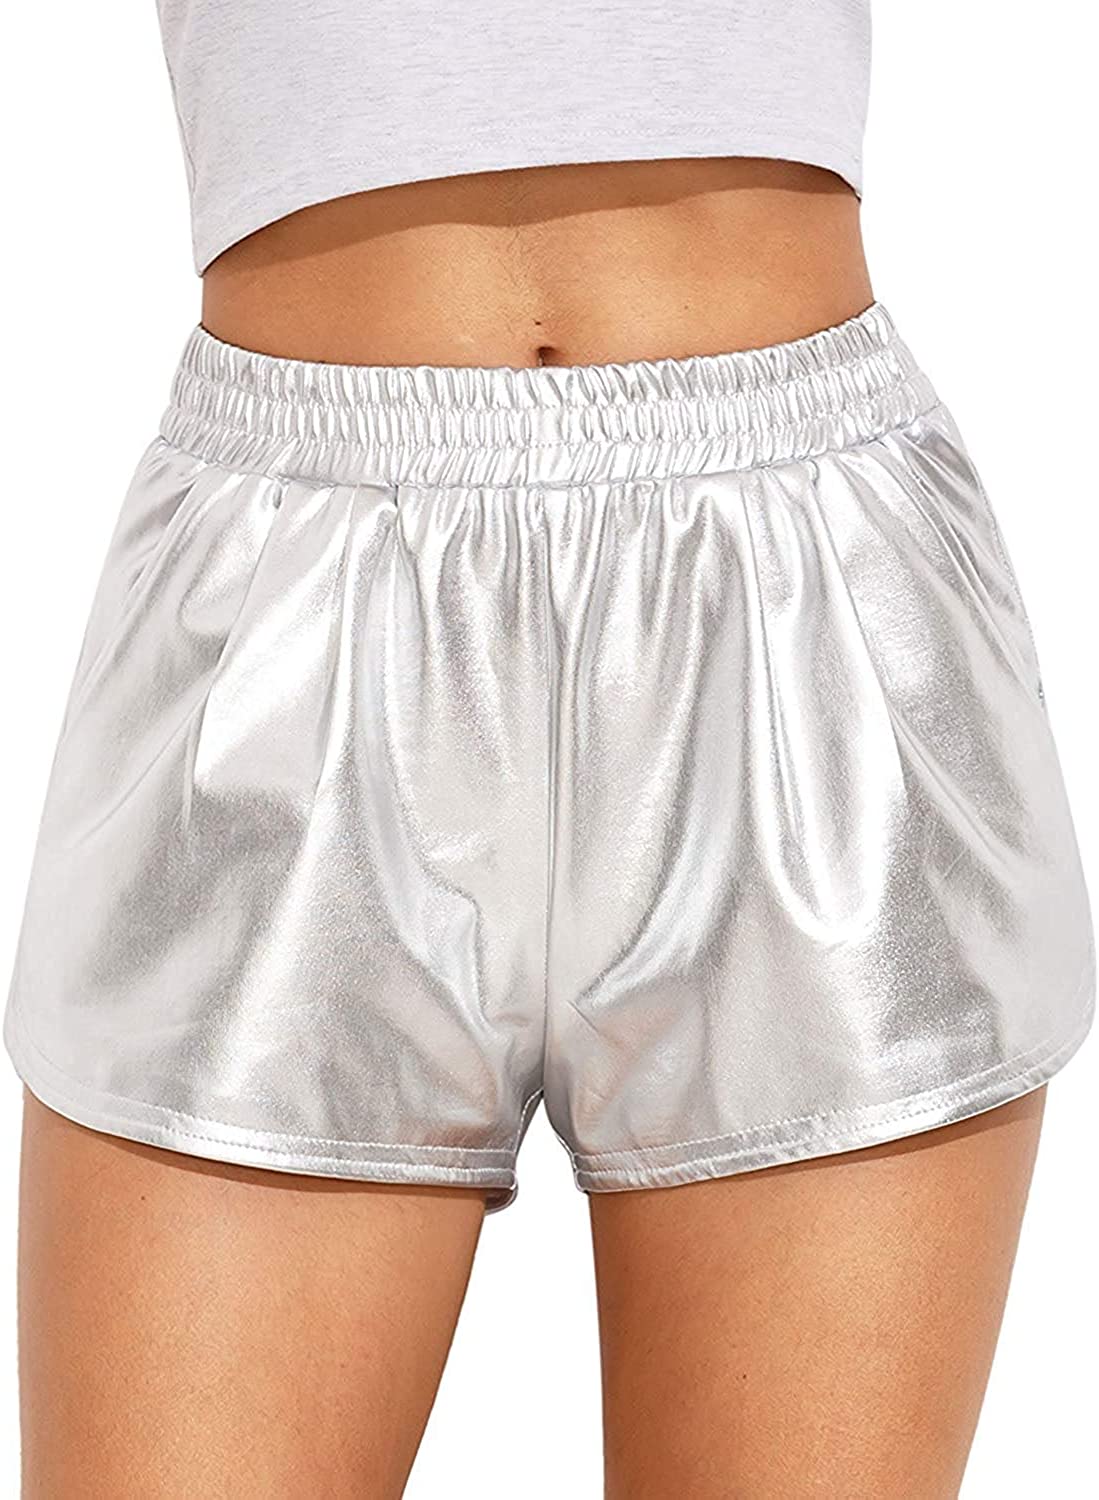 Ekouaer Womens Yoga Hot Shorts Shiny Metallic Outfit Pants Pocket for Costume Party Dance 